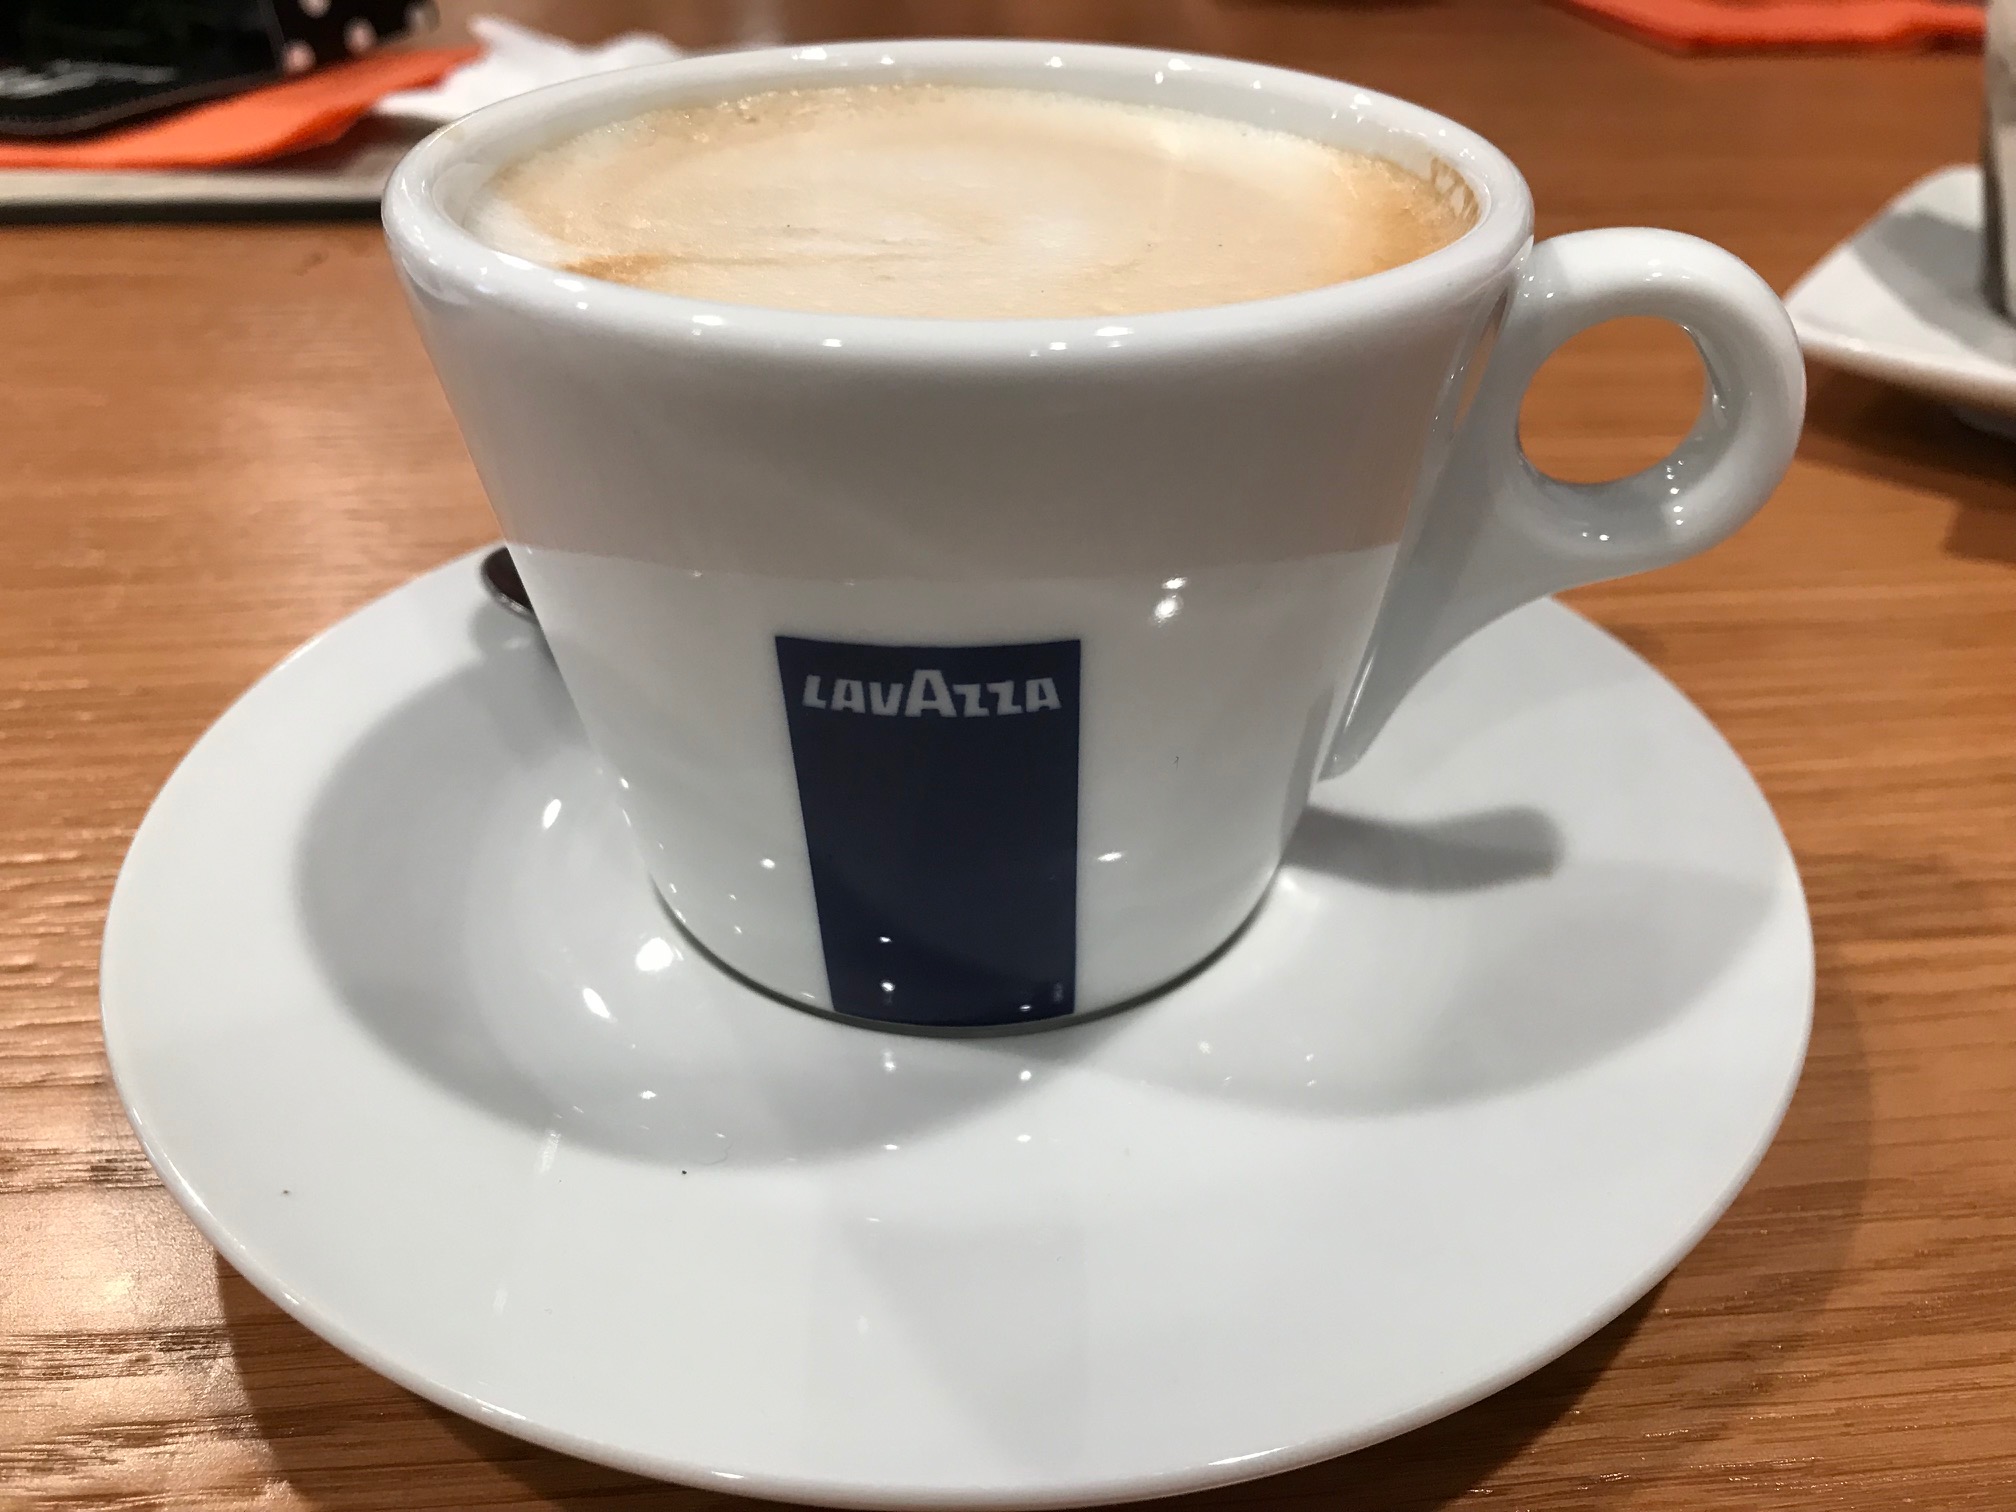 Lavazza - Cappuccino size - Coffee Cup Review